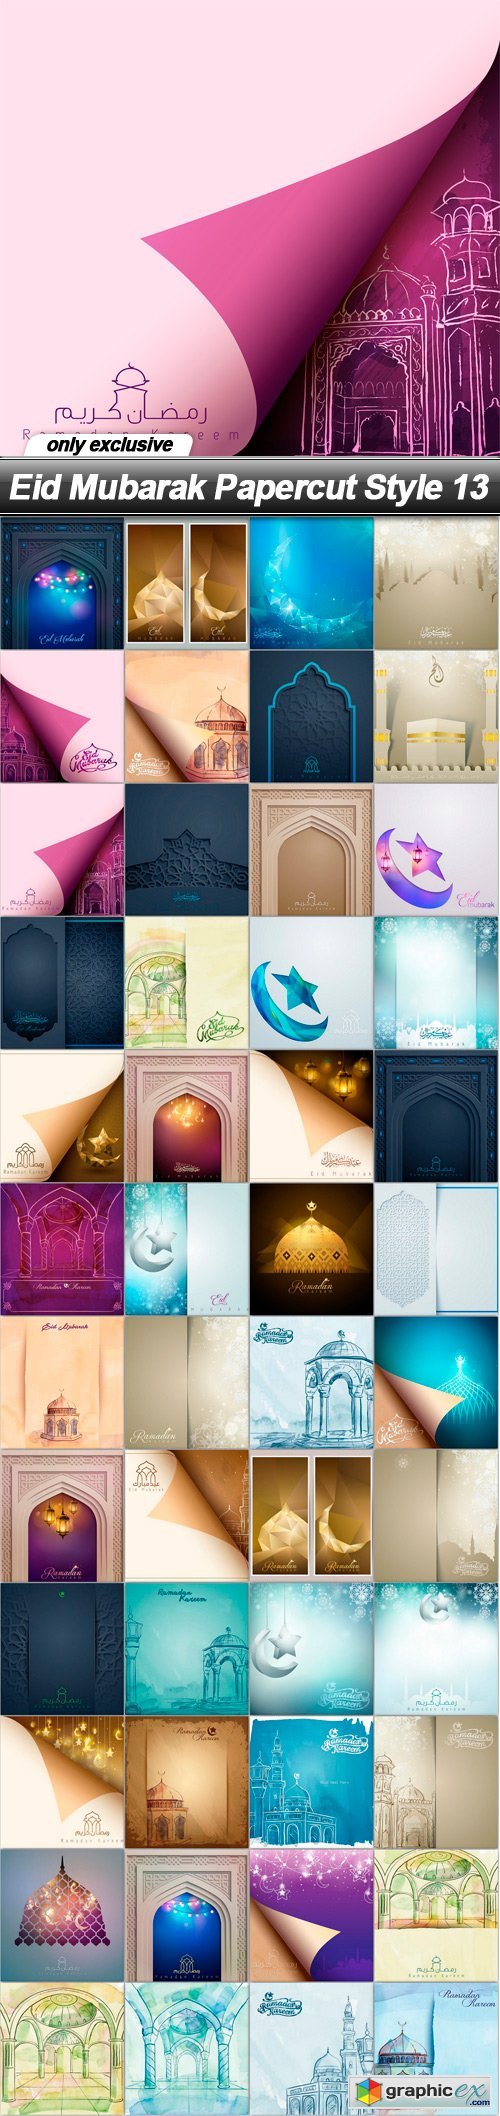 Eid Mubarak Papercut Style 13 - 48 EPS